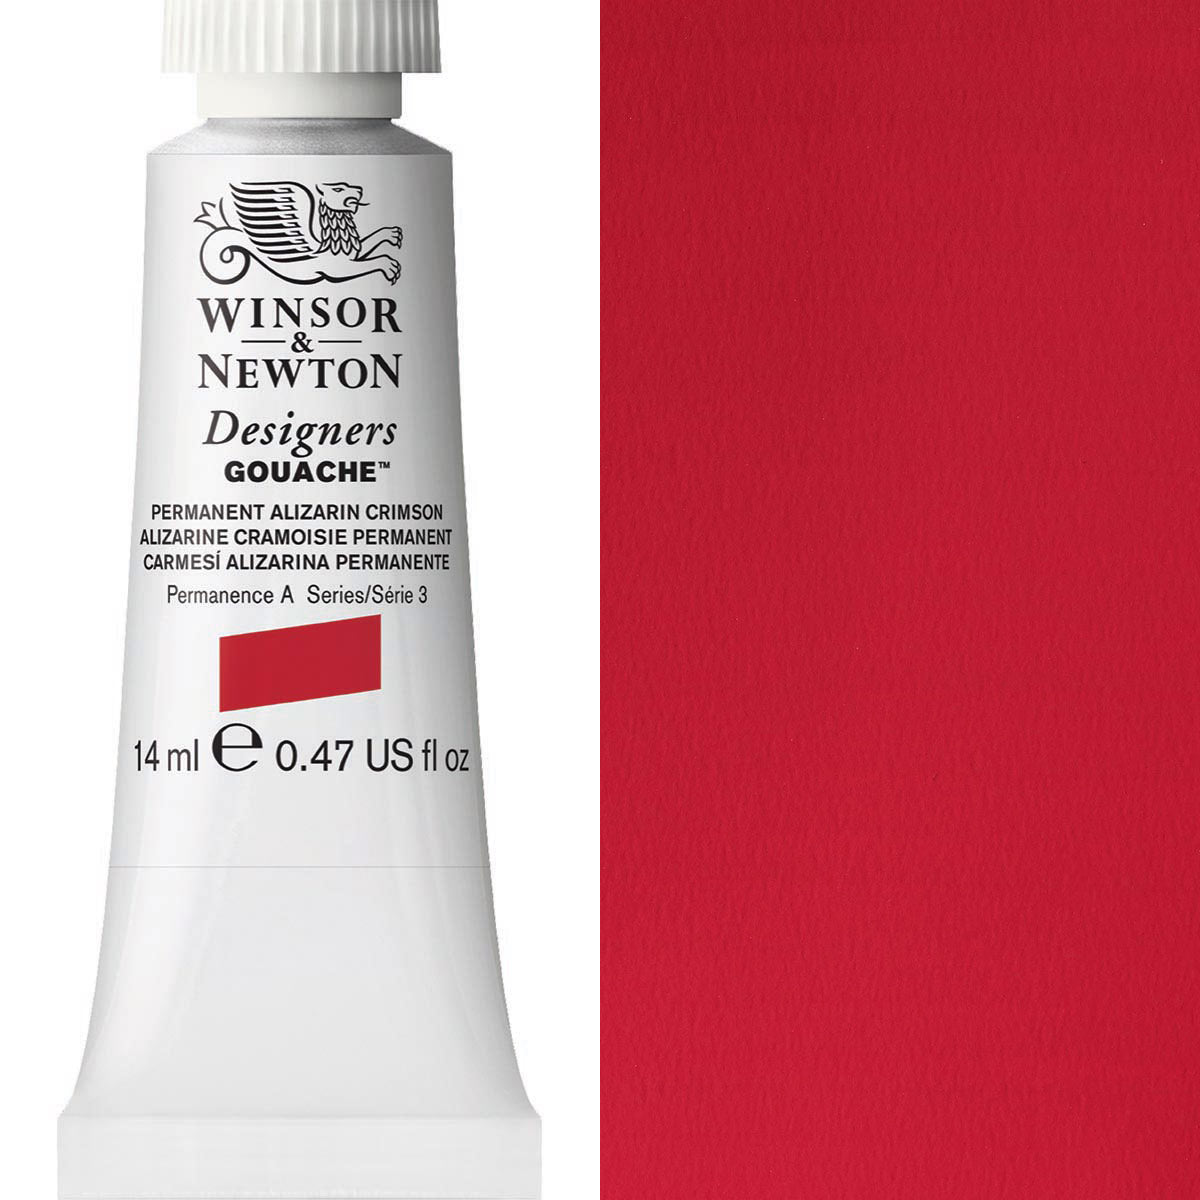 Winsor en Newton - Designers Gouache - 14ml - Permanente Alizarin Crimson